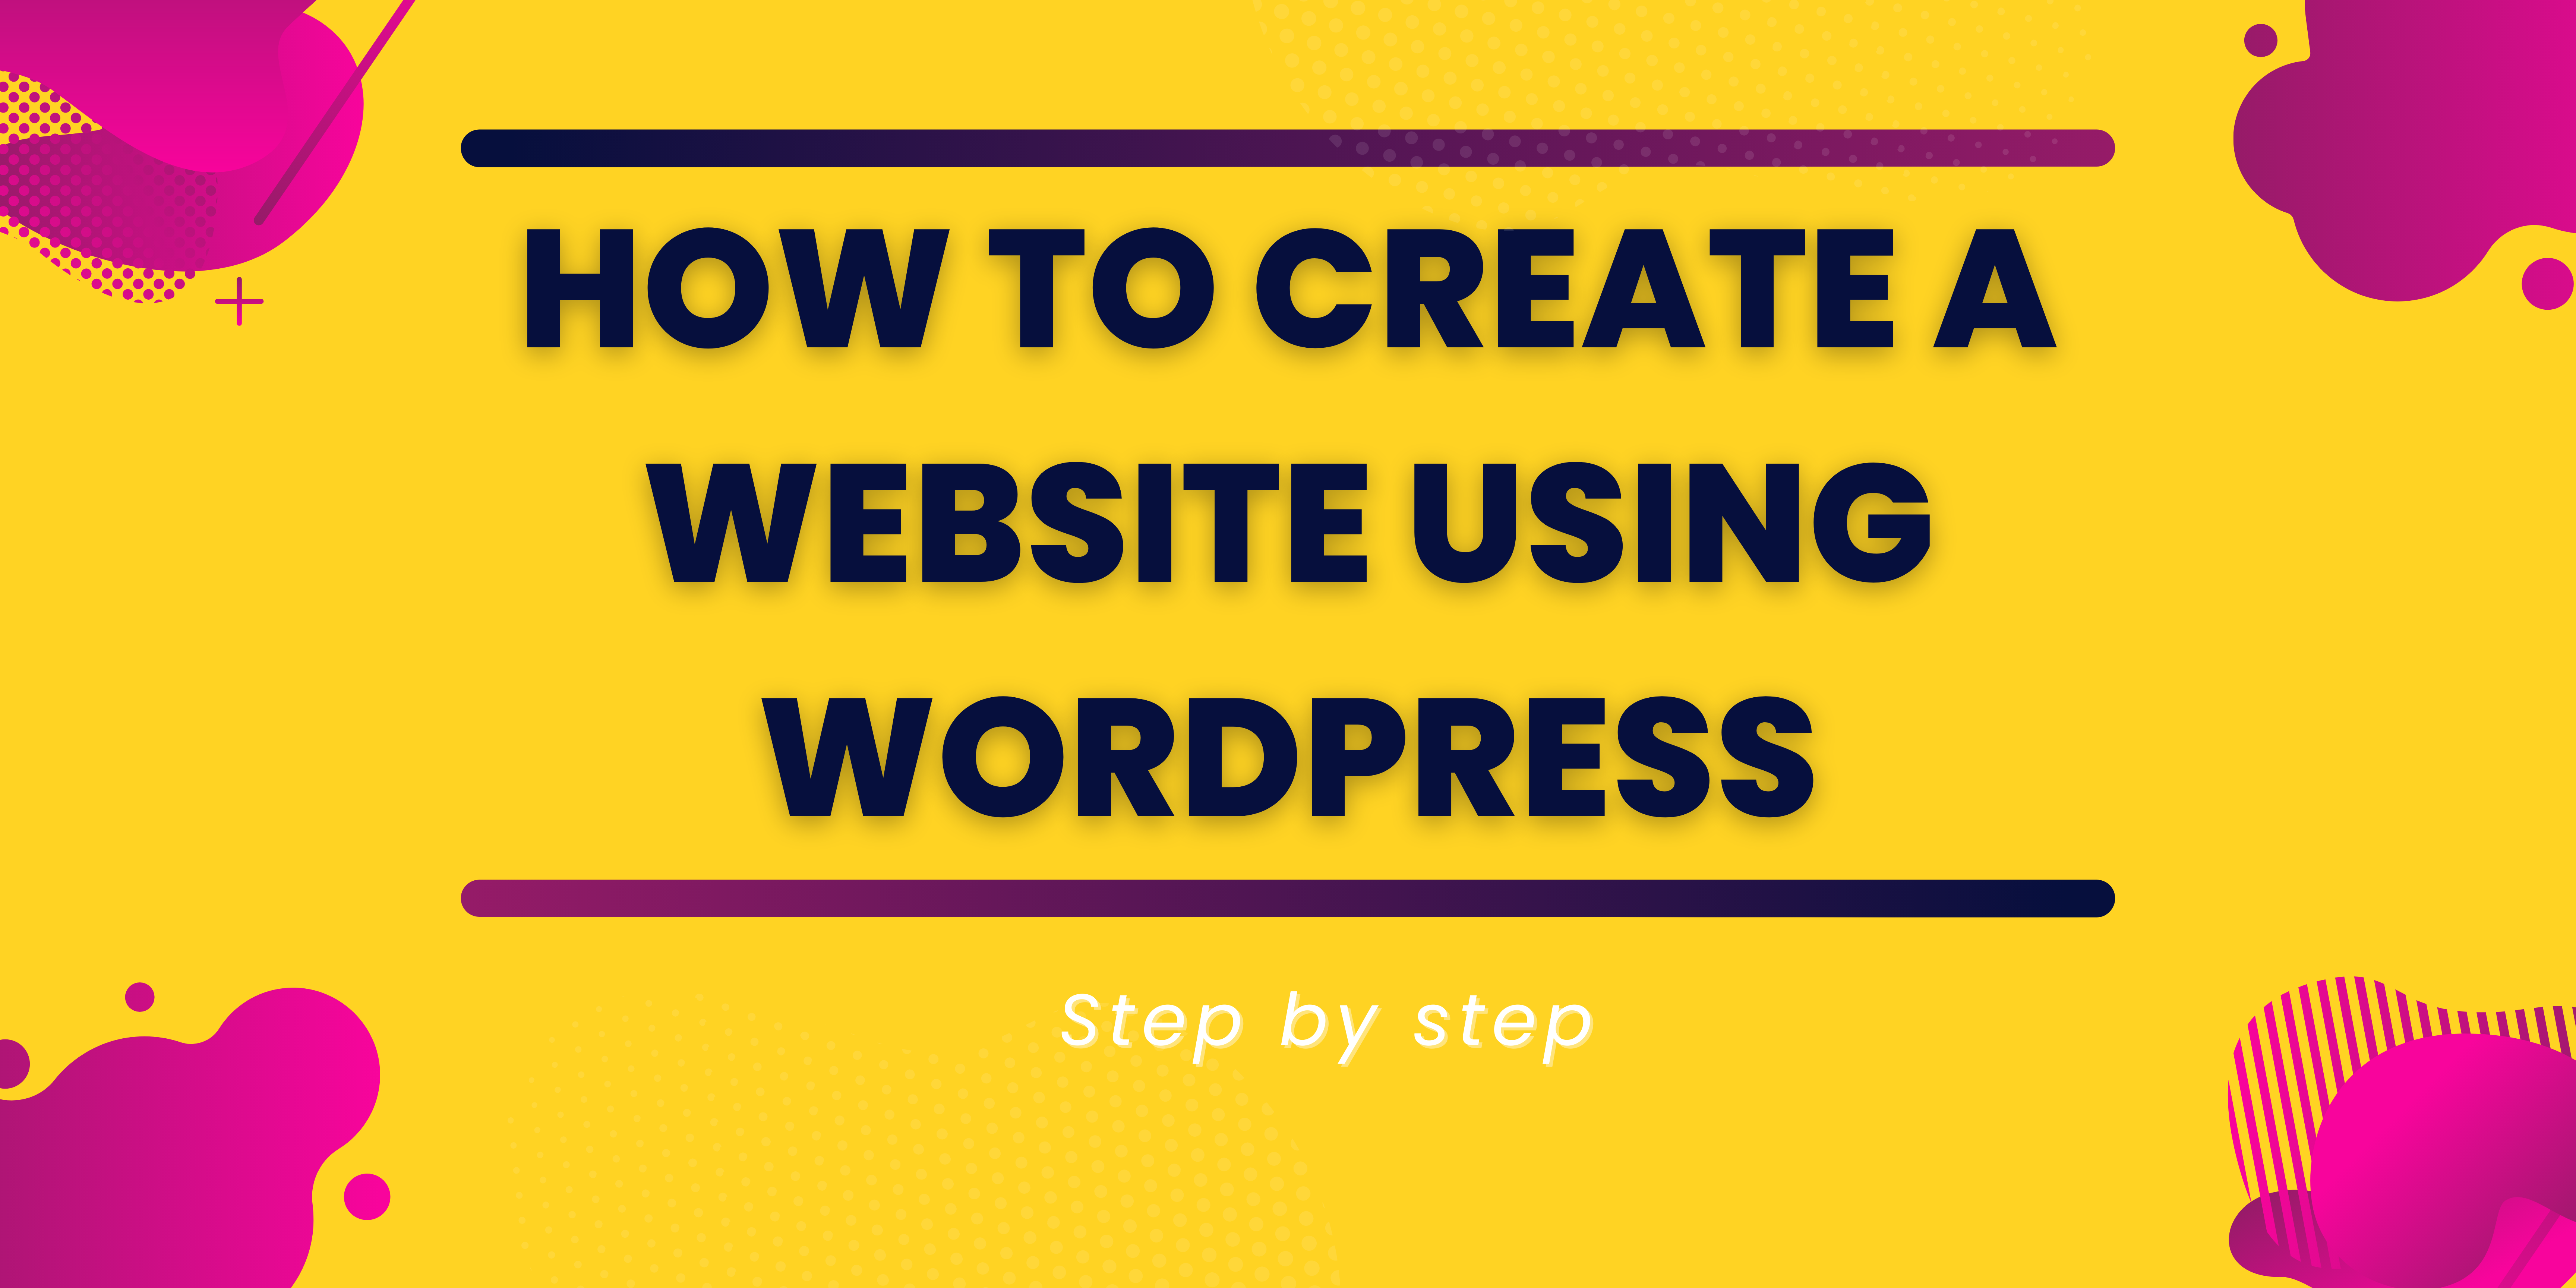 How to Create a Website Using WordPress